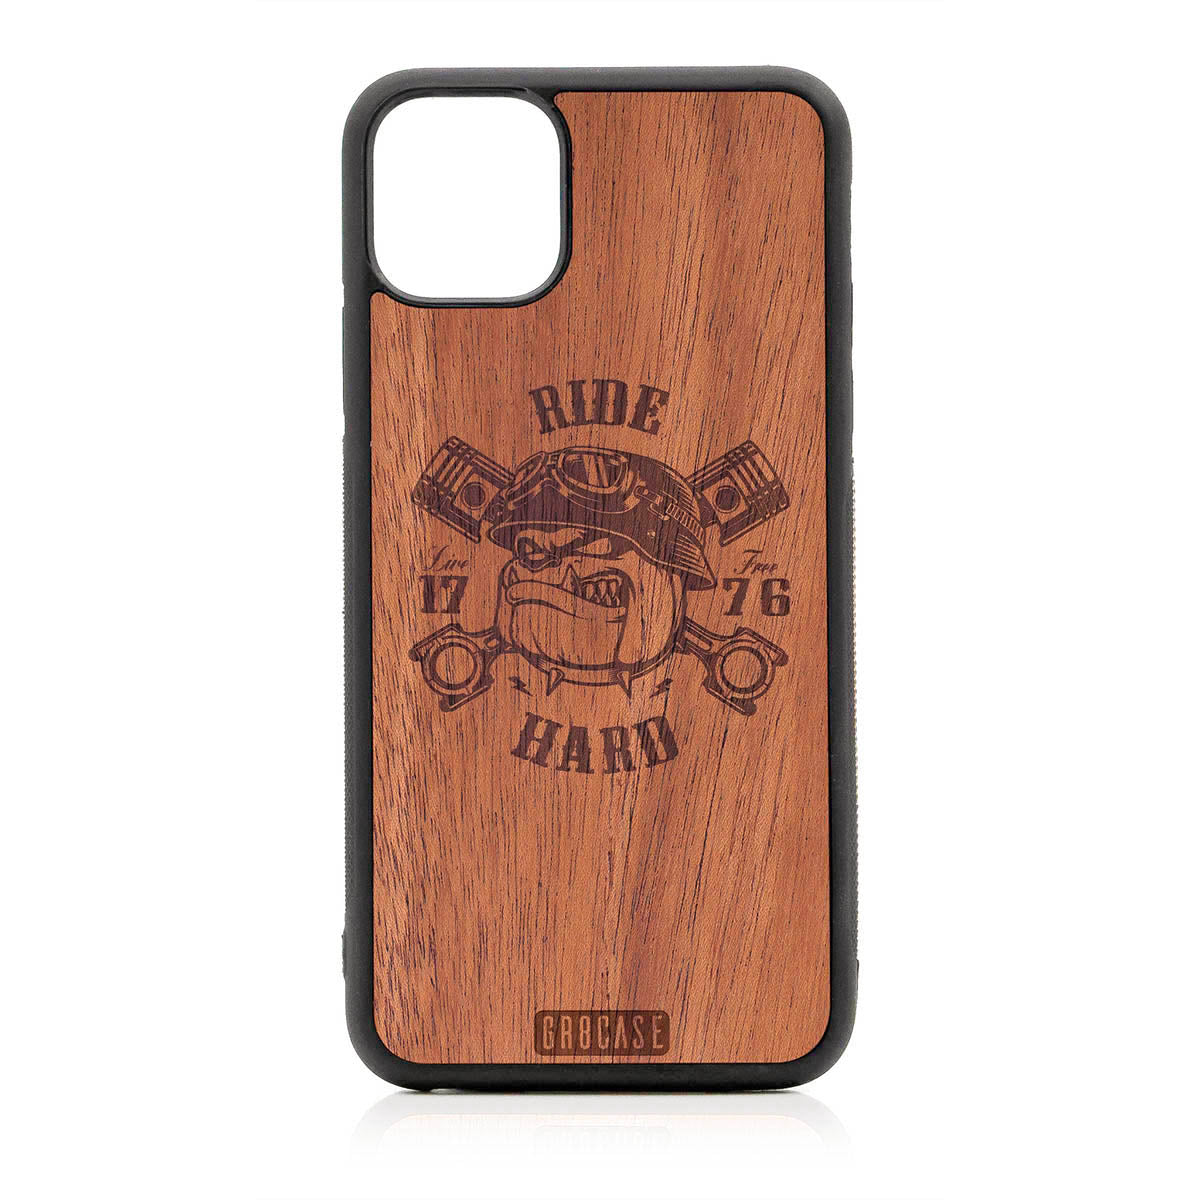 Ride Hard Live Free (Biker Dog) Design Wood Case For iPhone 11 Pro Max by GR8CASE